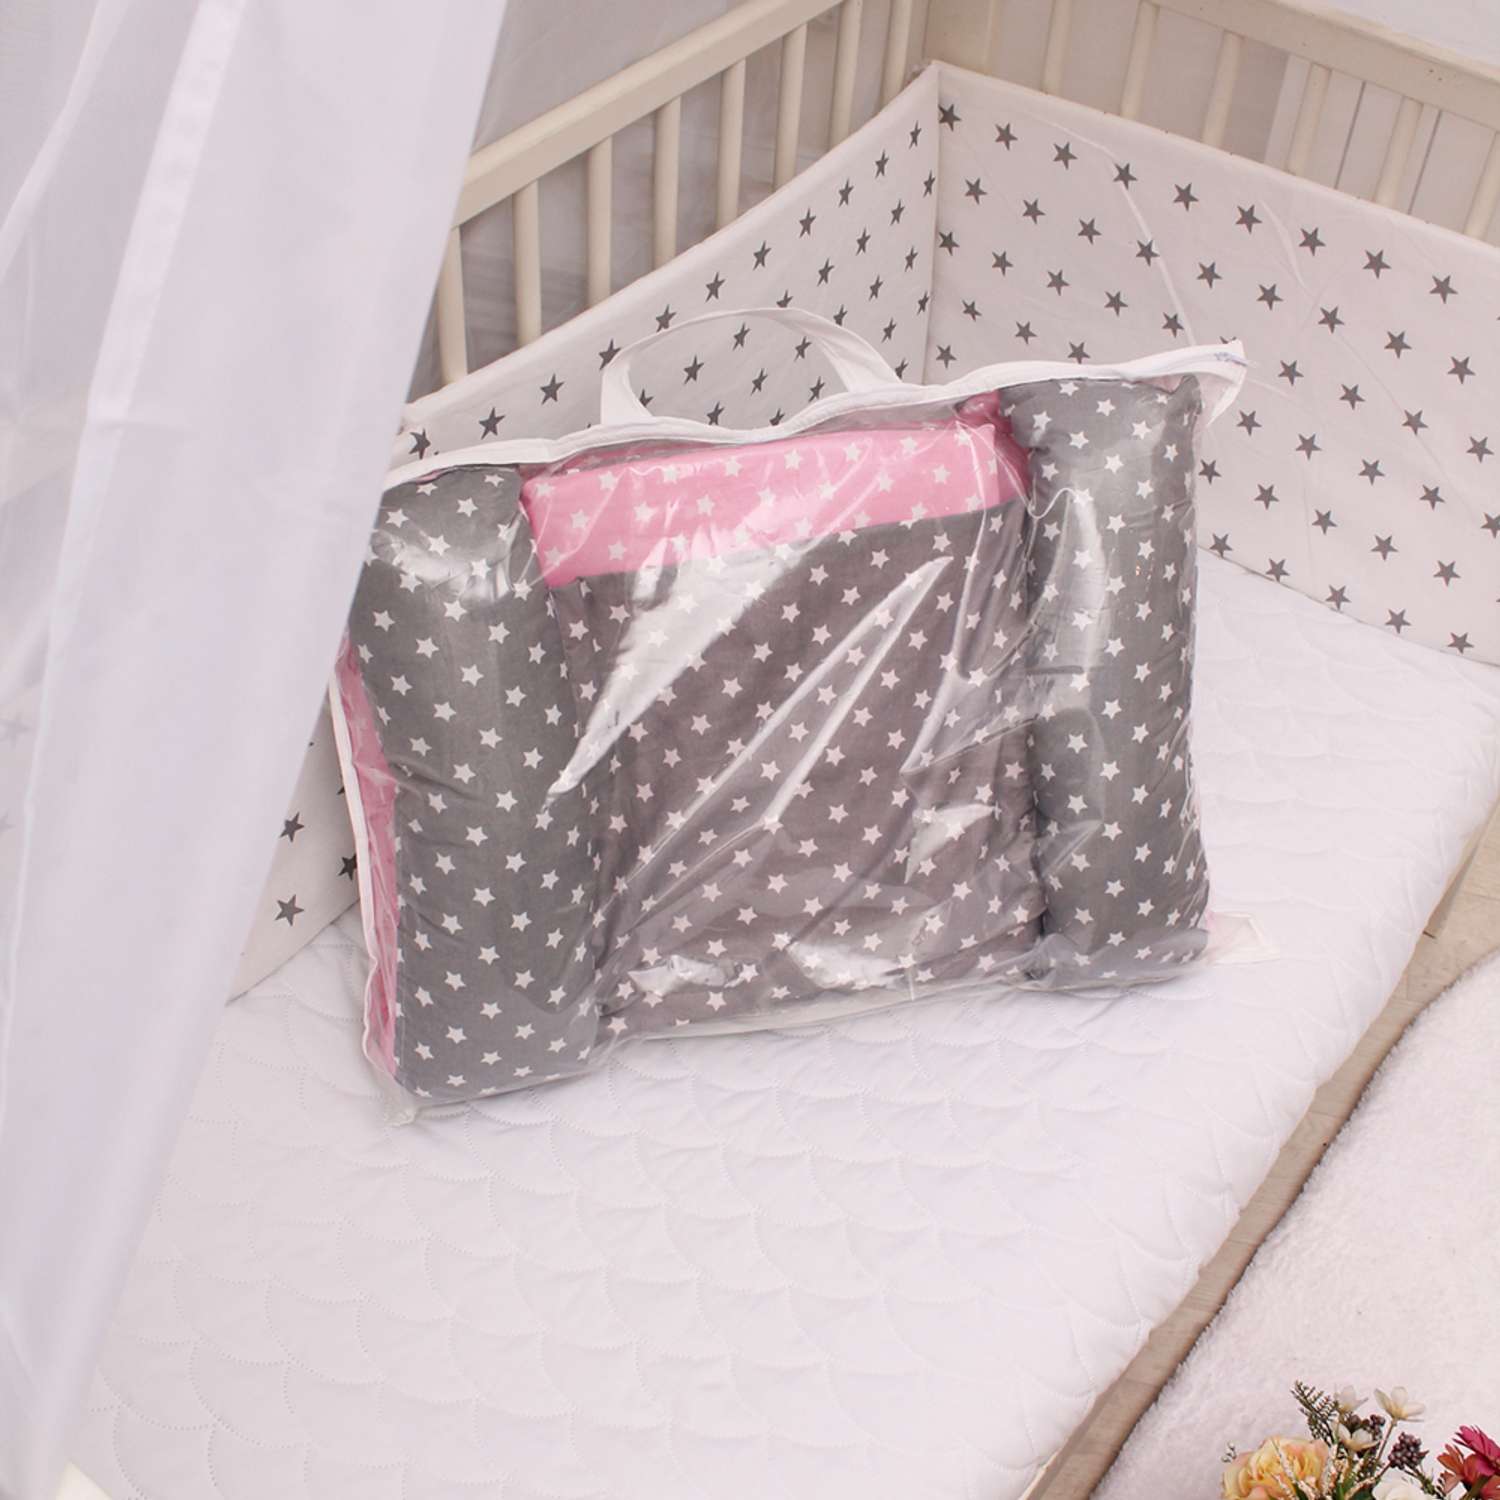 Гнездышко-кокон Body Pillow для новорожденных - фото 6